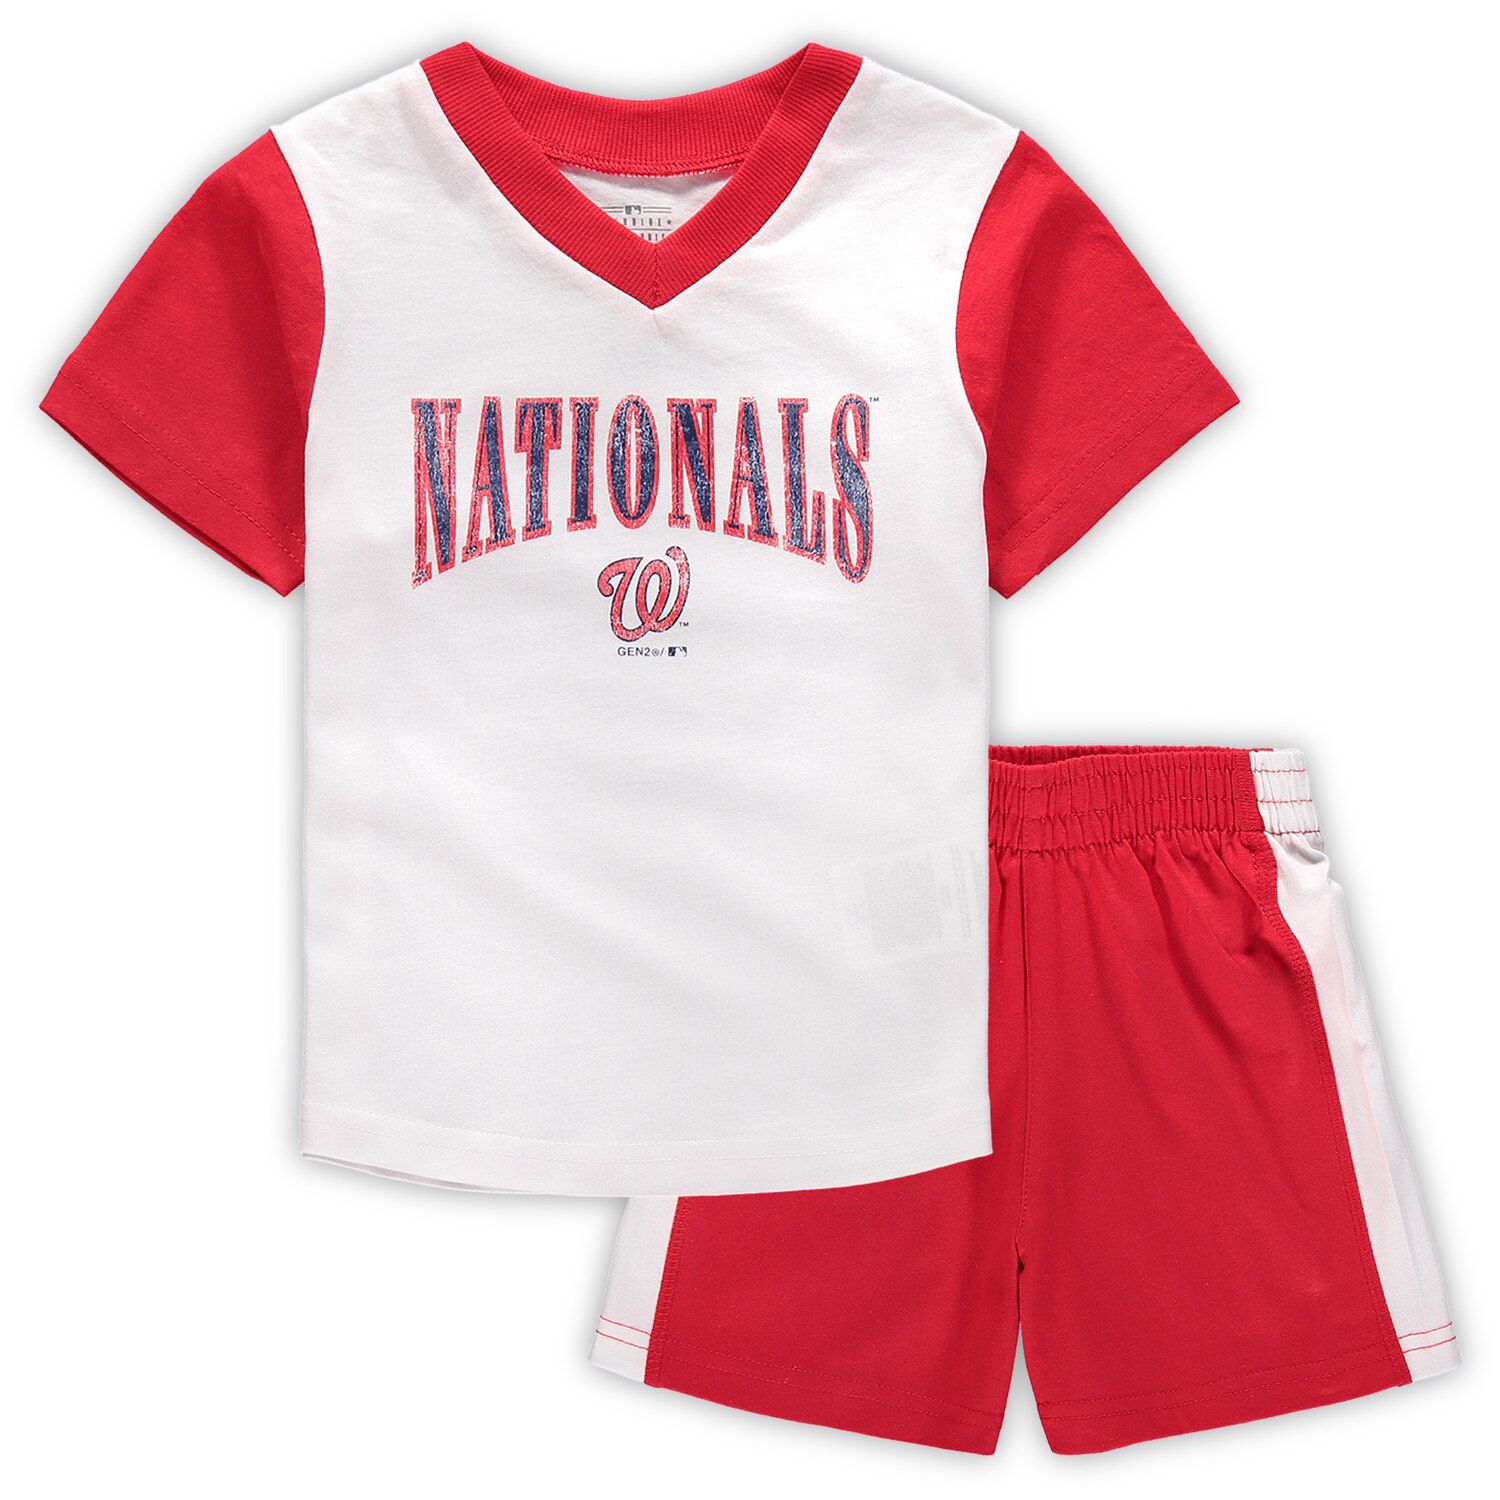 washington nationals toddler shirt